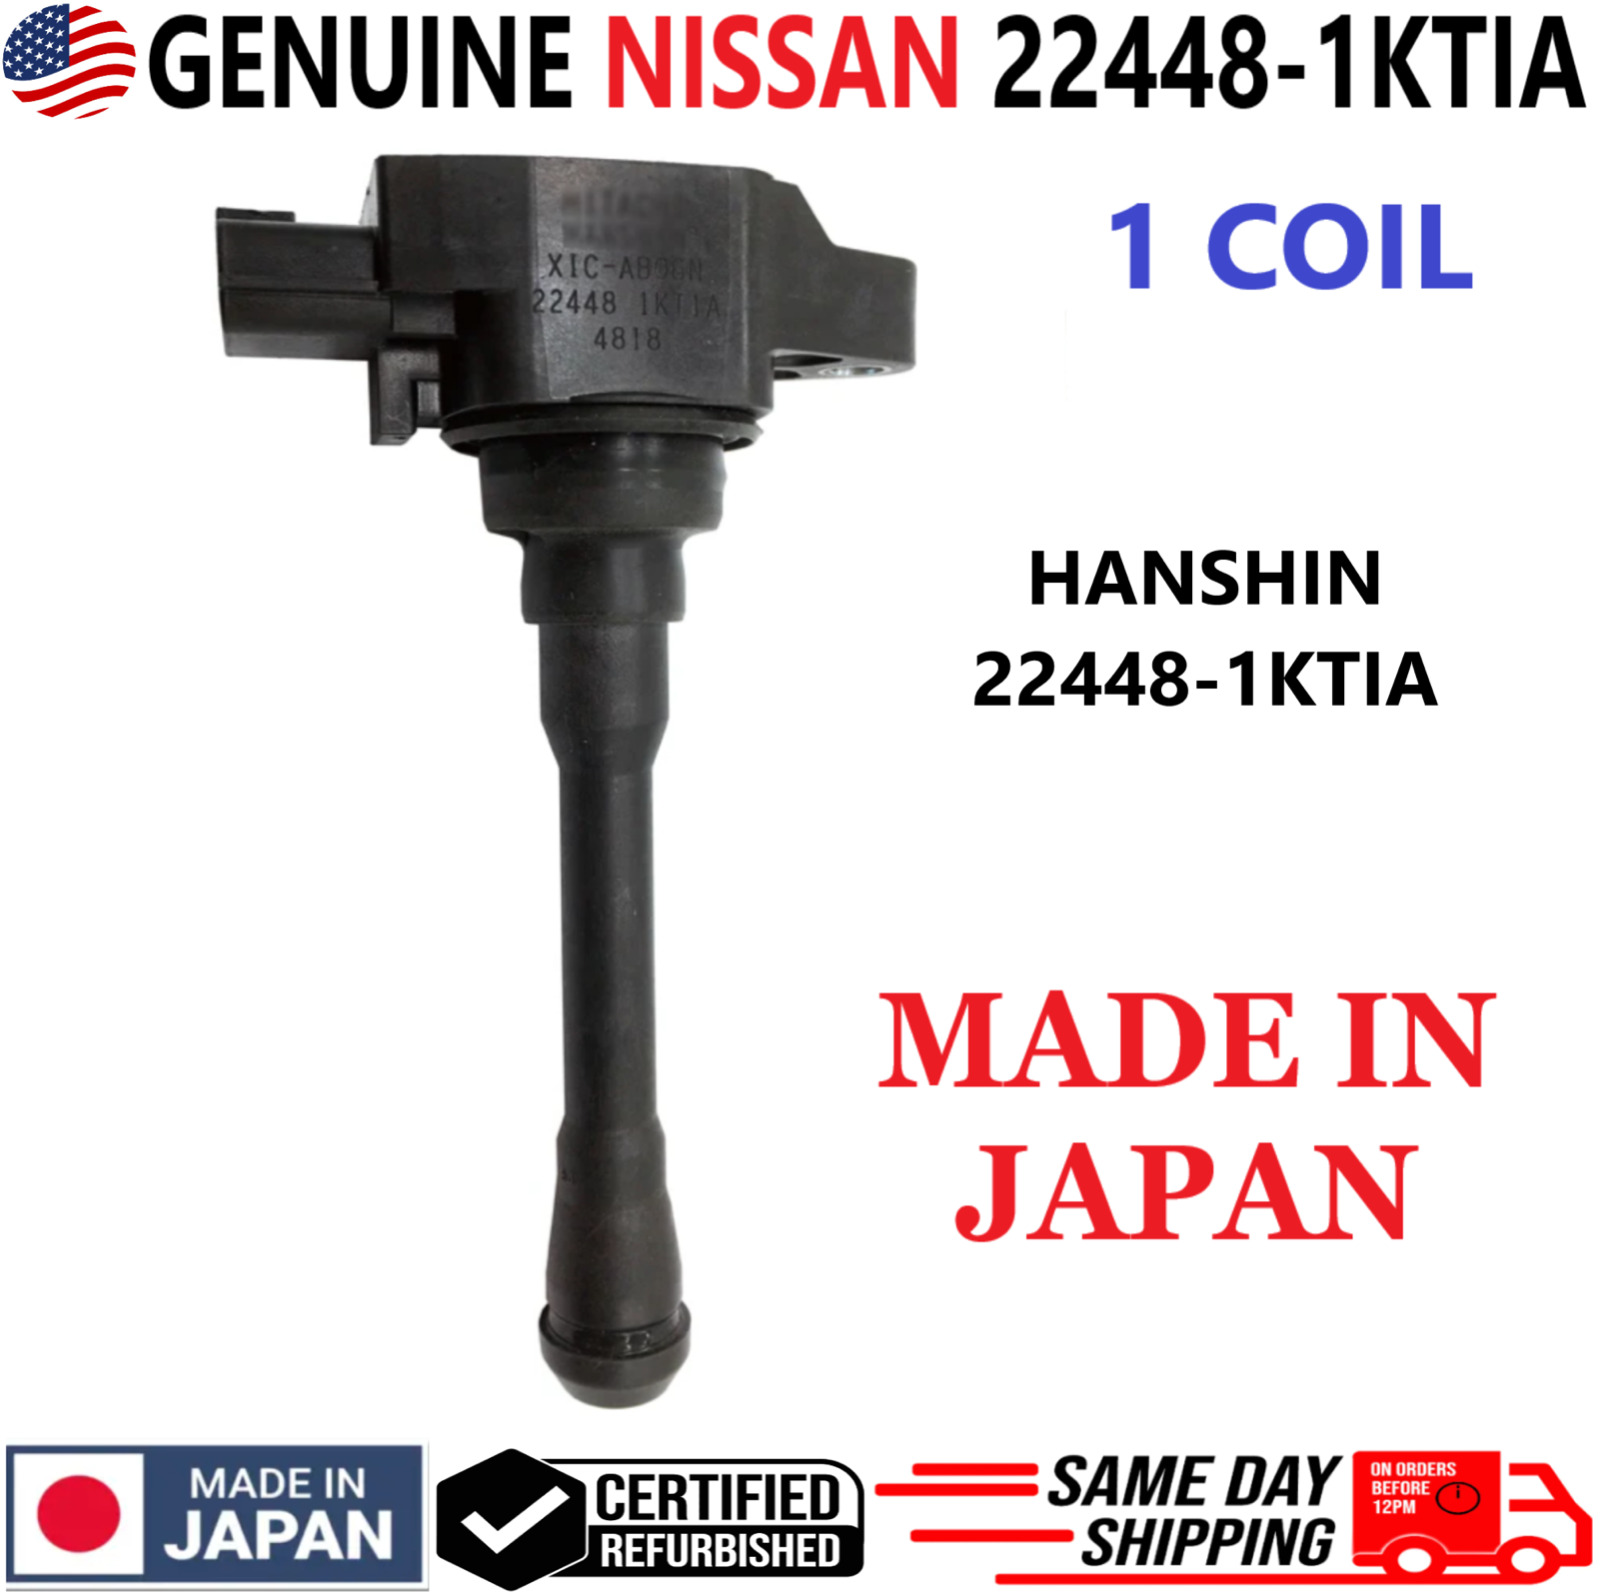 GENUINE Nissan Ignition Coil For 2007-2015 Nissan & Infiniti I4 V8, 22448-1KTIA